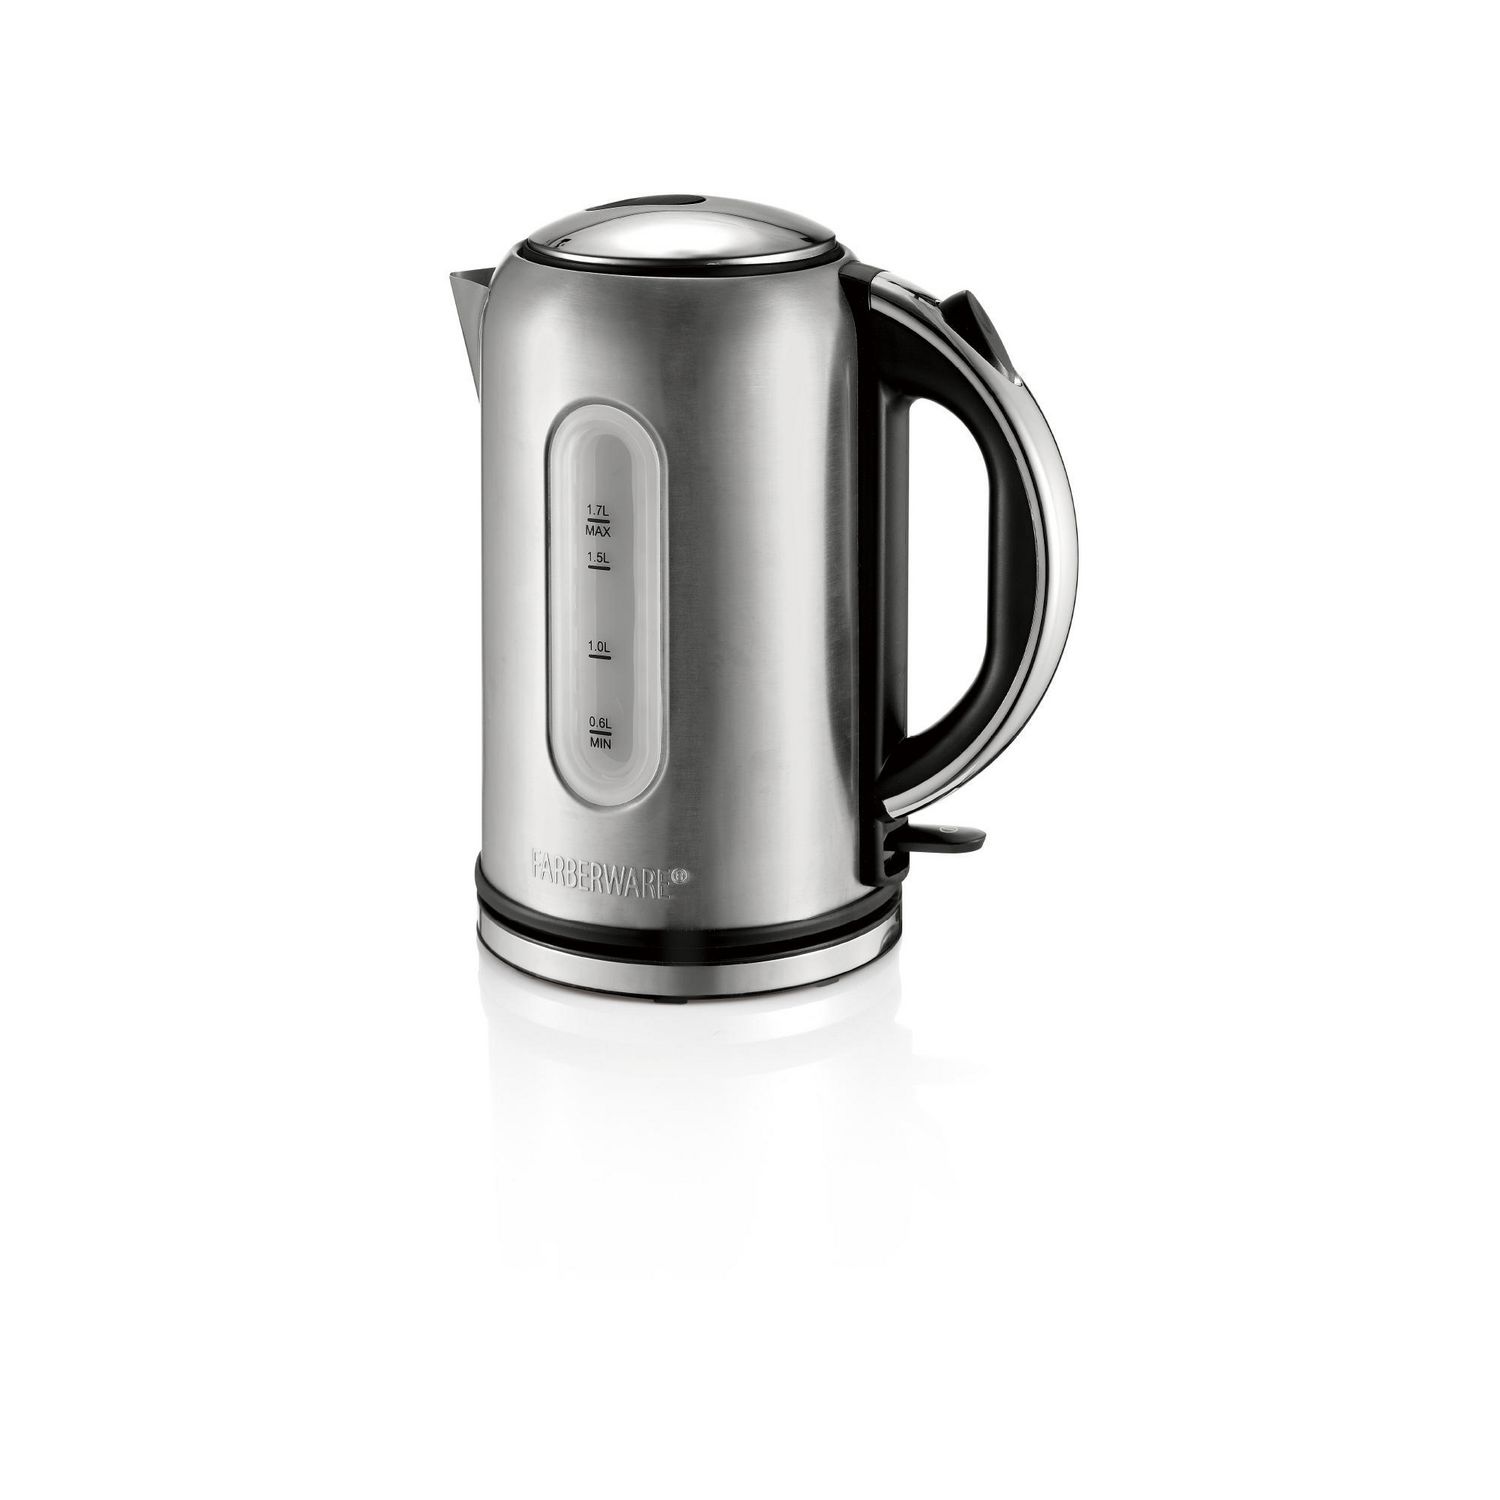 First чайник фильтр. Bouilloire. Military kettle. Thermostatic electric kettle 2